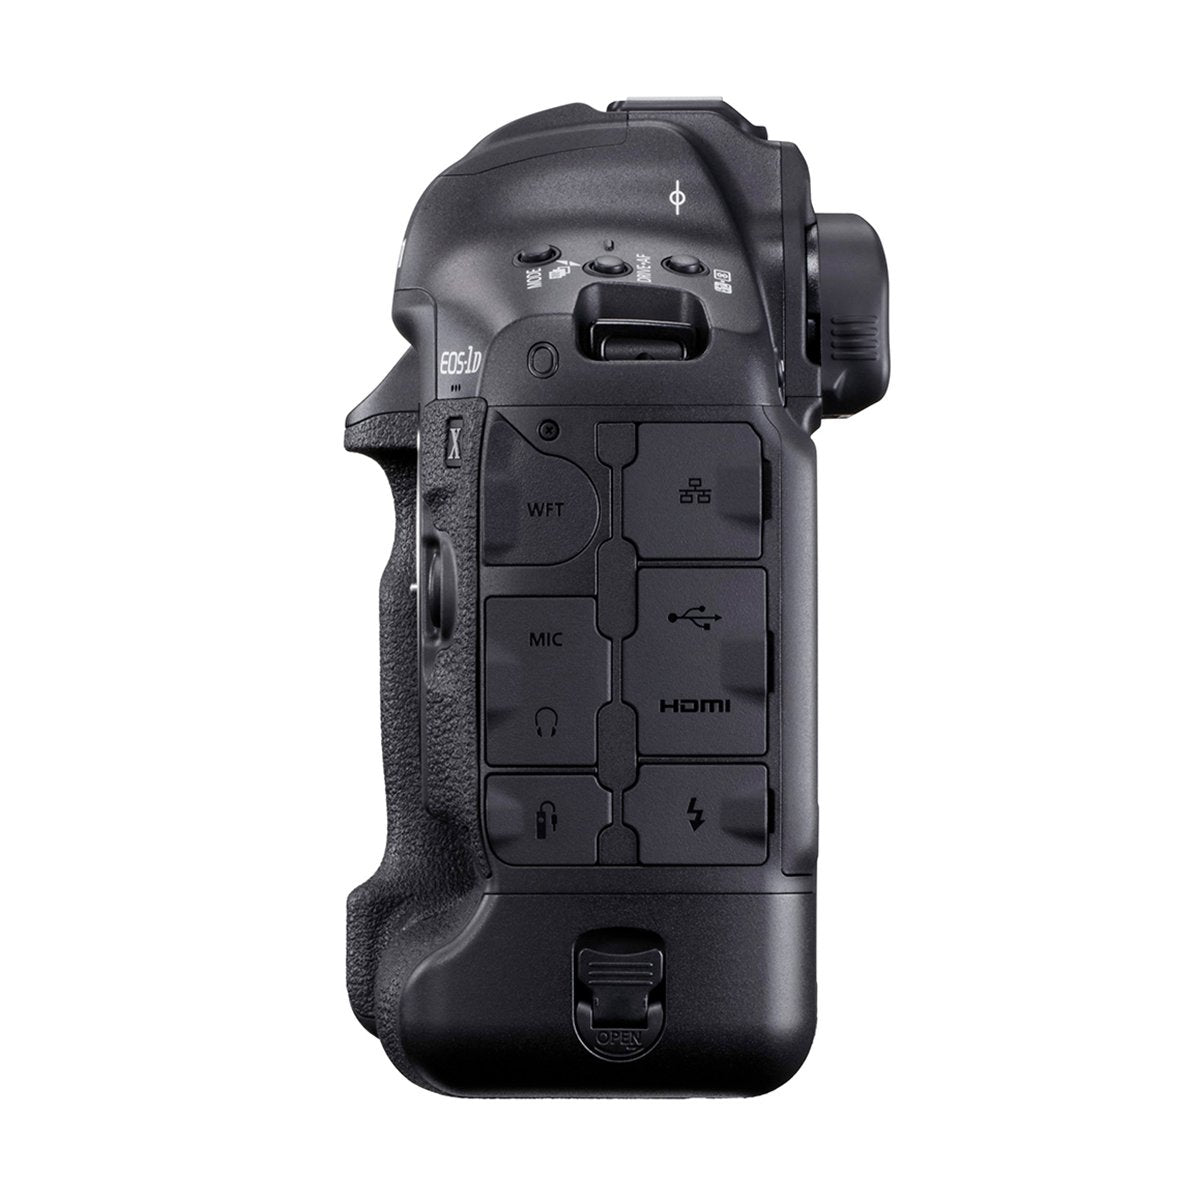 Canon EOS-1DX Mark III Digital Camera Body